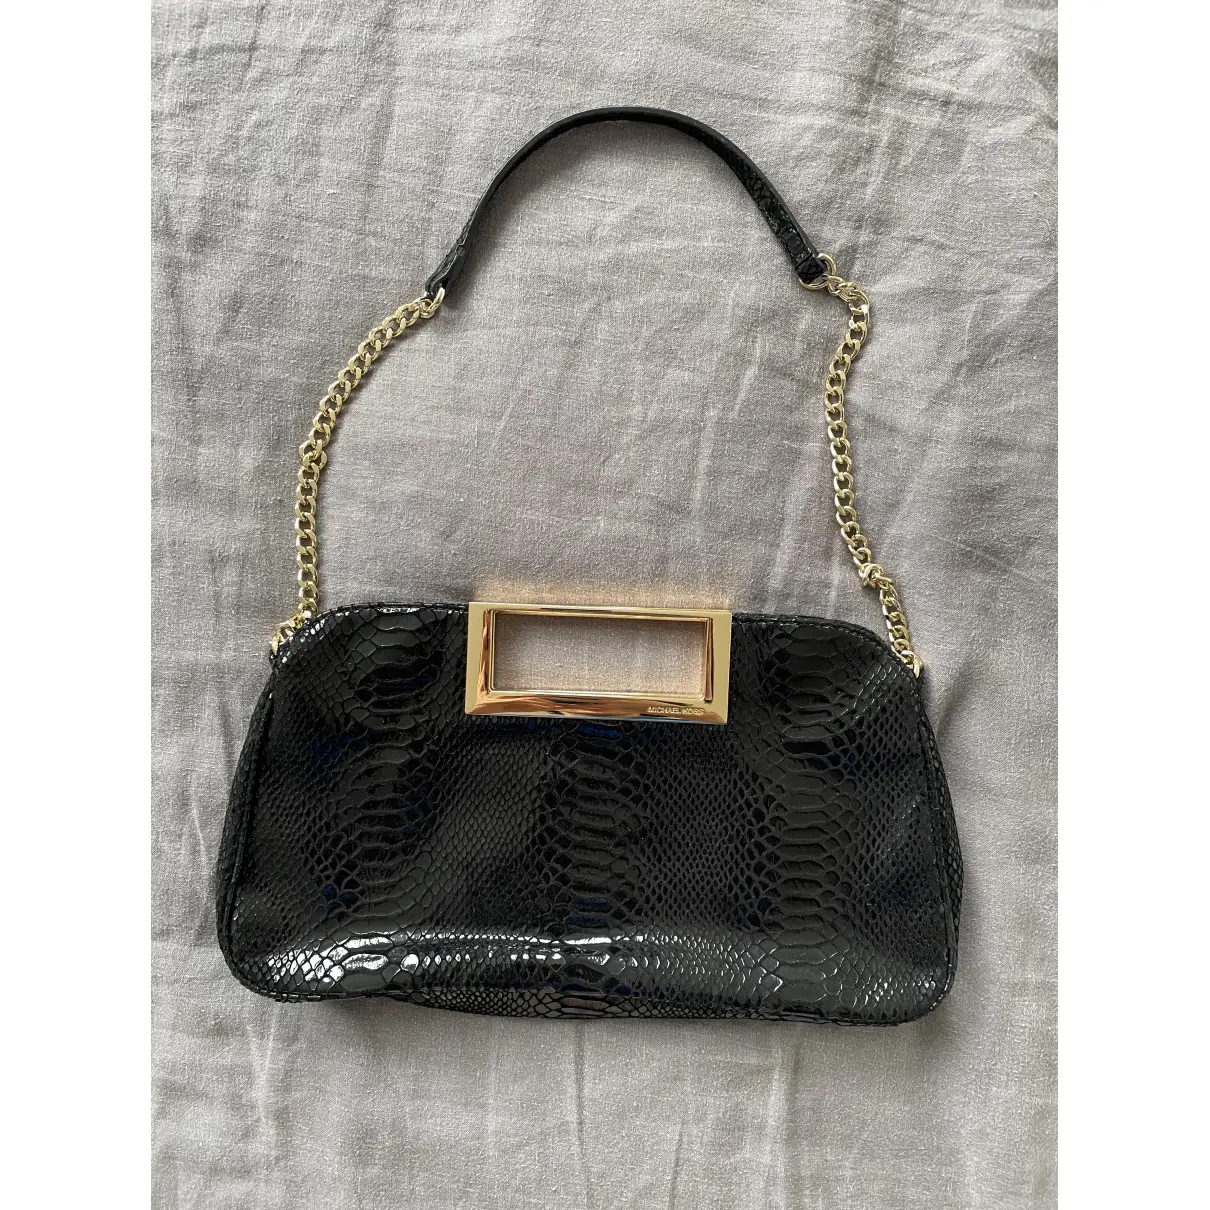 Buy Michael Kors Patent leather handbag online